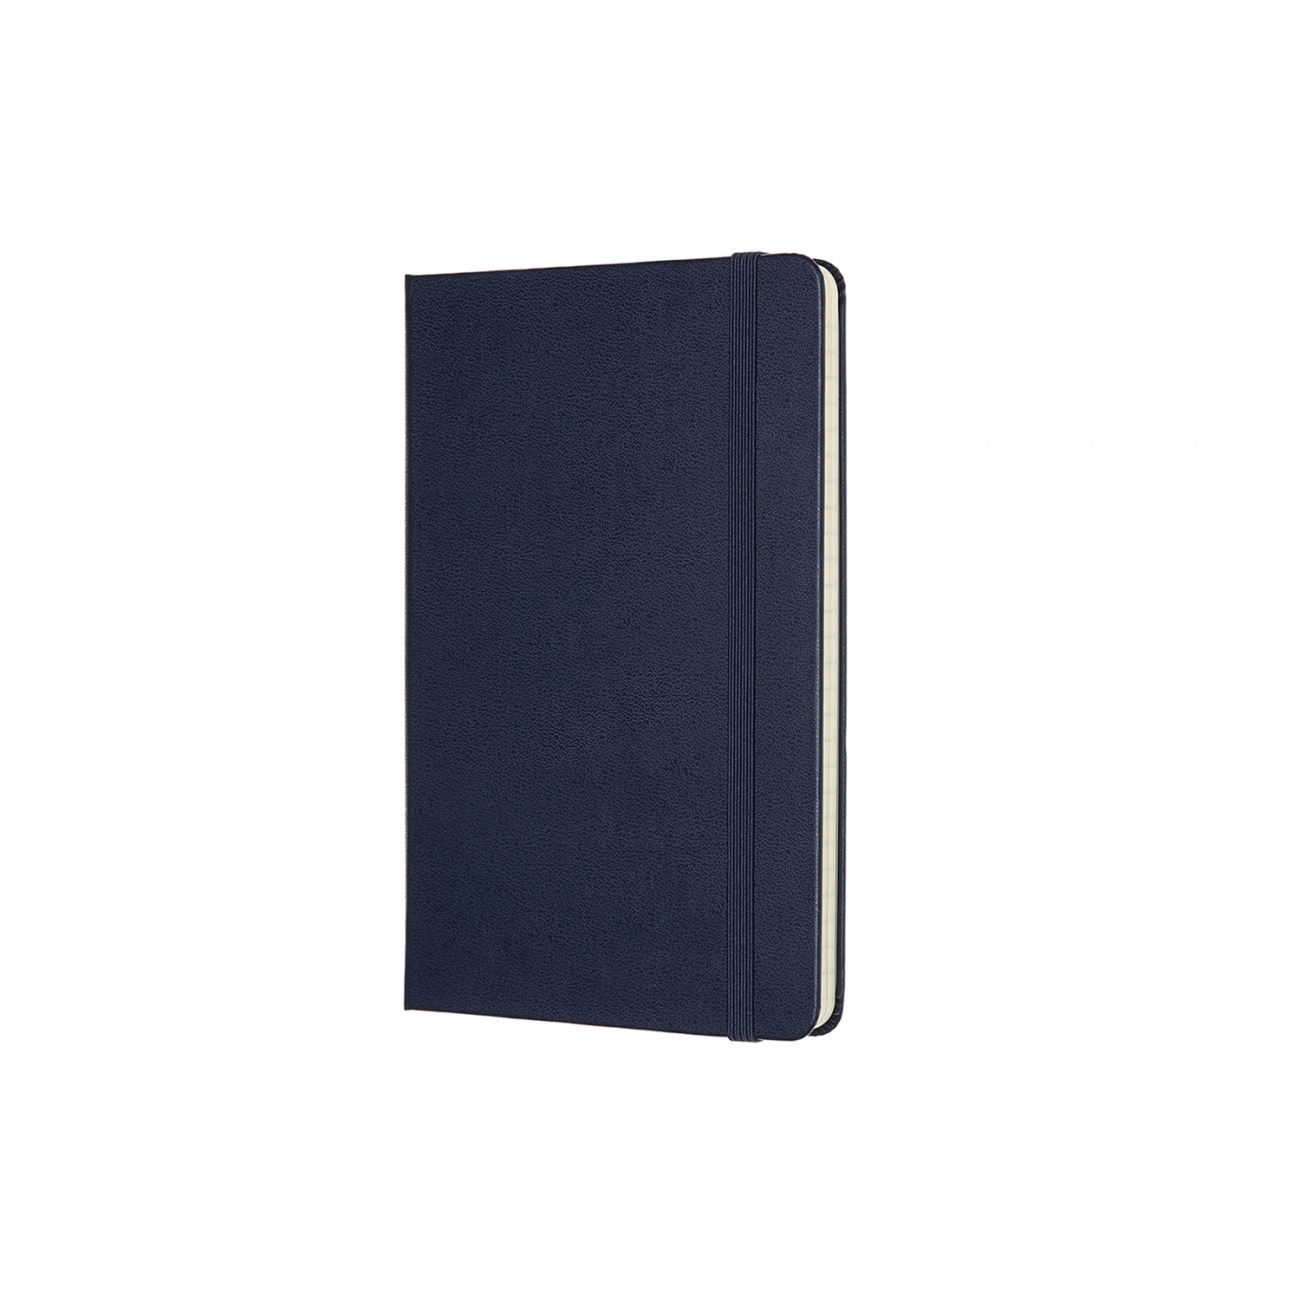 CLASSIC HARD COVER NOTEBOOK - RULED - MEDIUM - SAPPHIRE BLUE